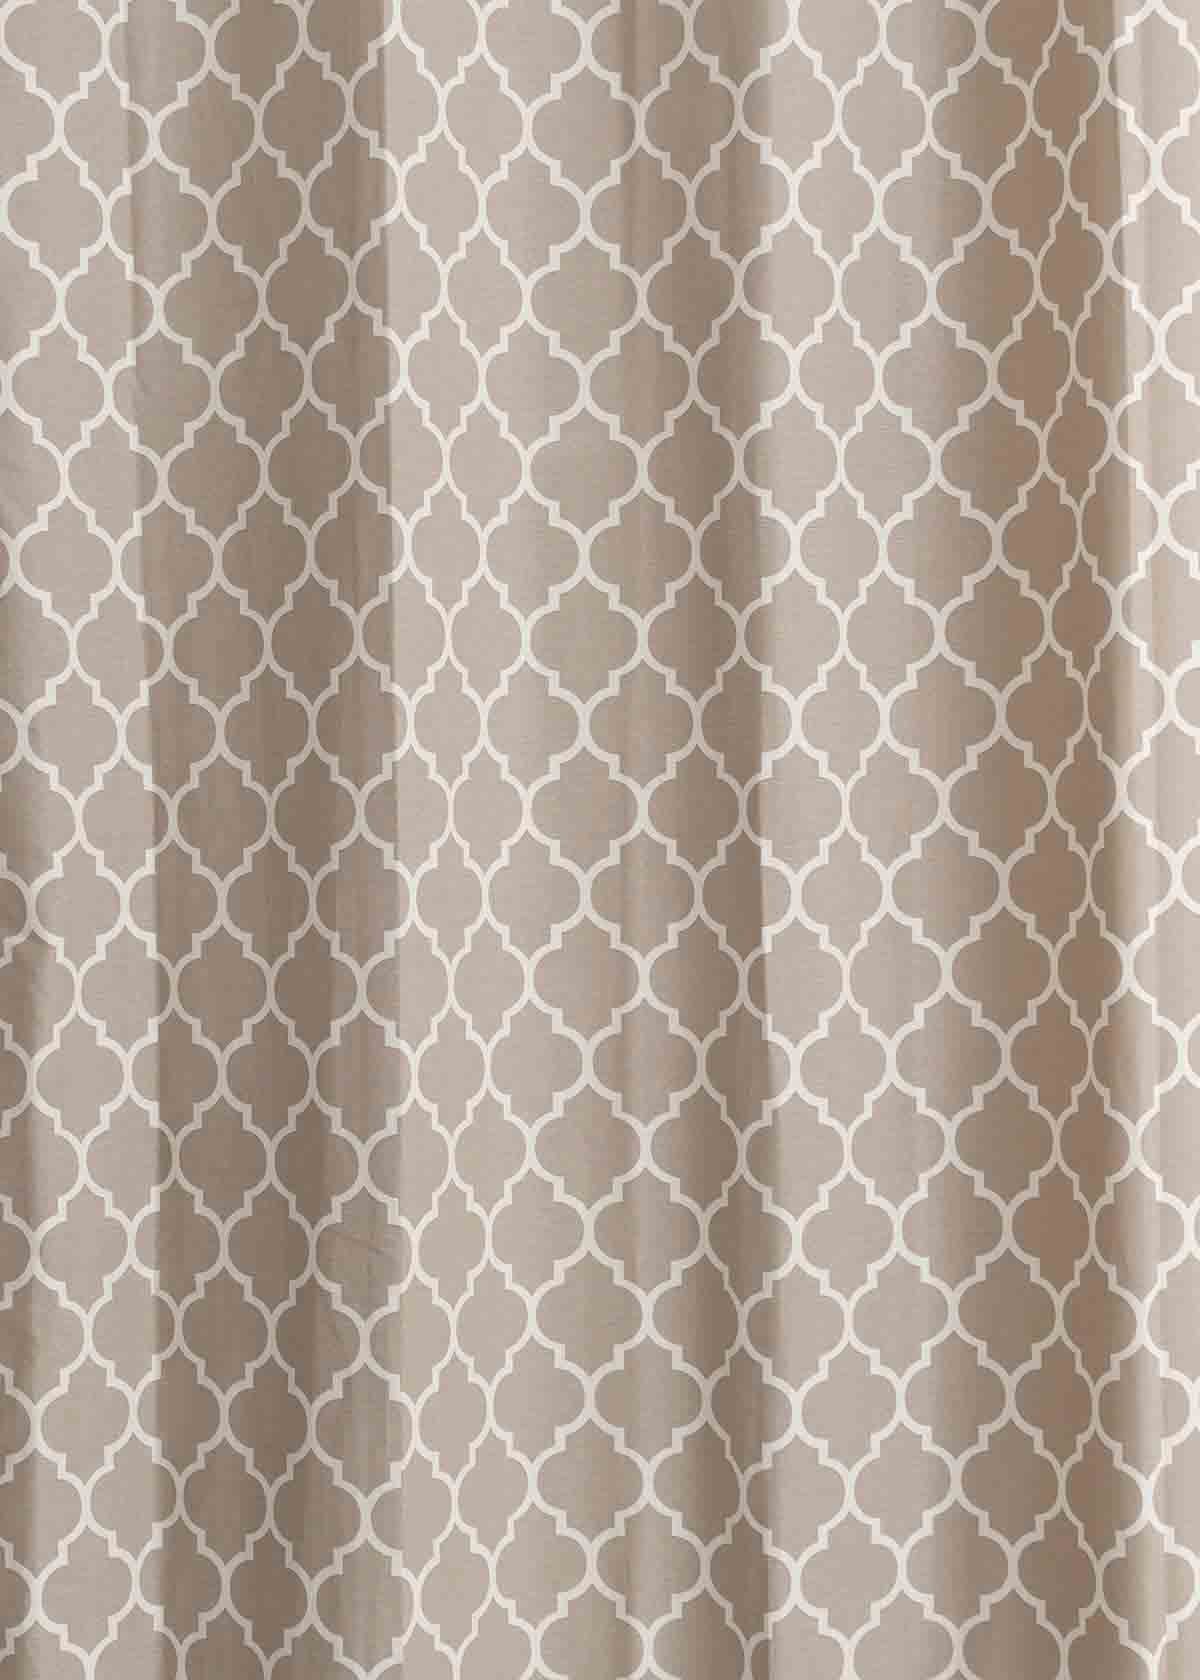 Reverse Trellis 100% cotton geometric curtain for bed room - Room darkening - Walnut Grey - Pack of 1